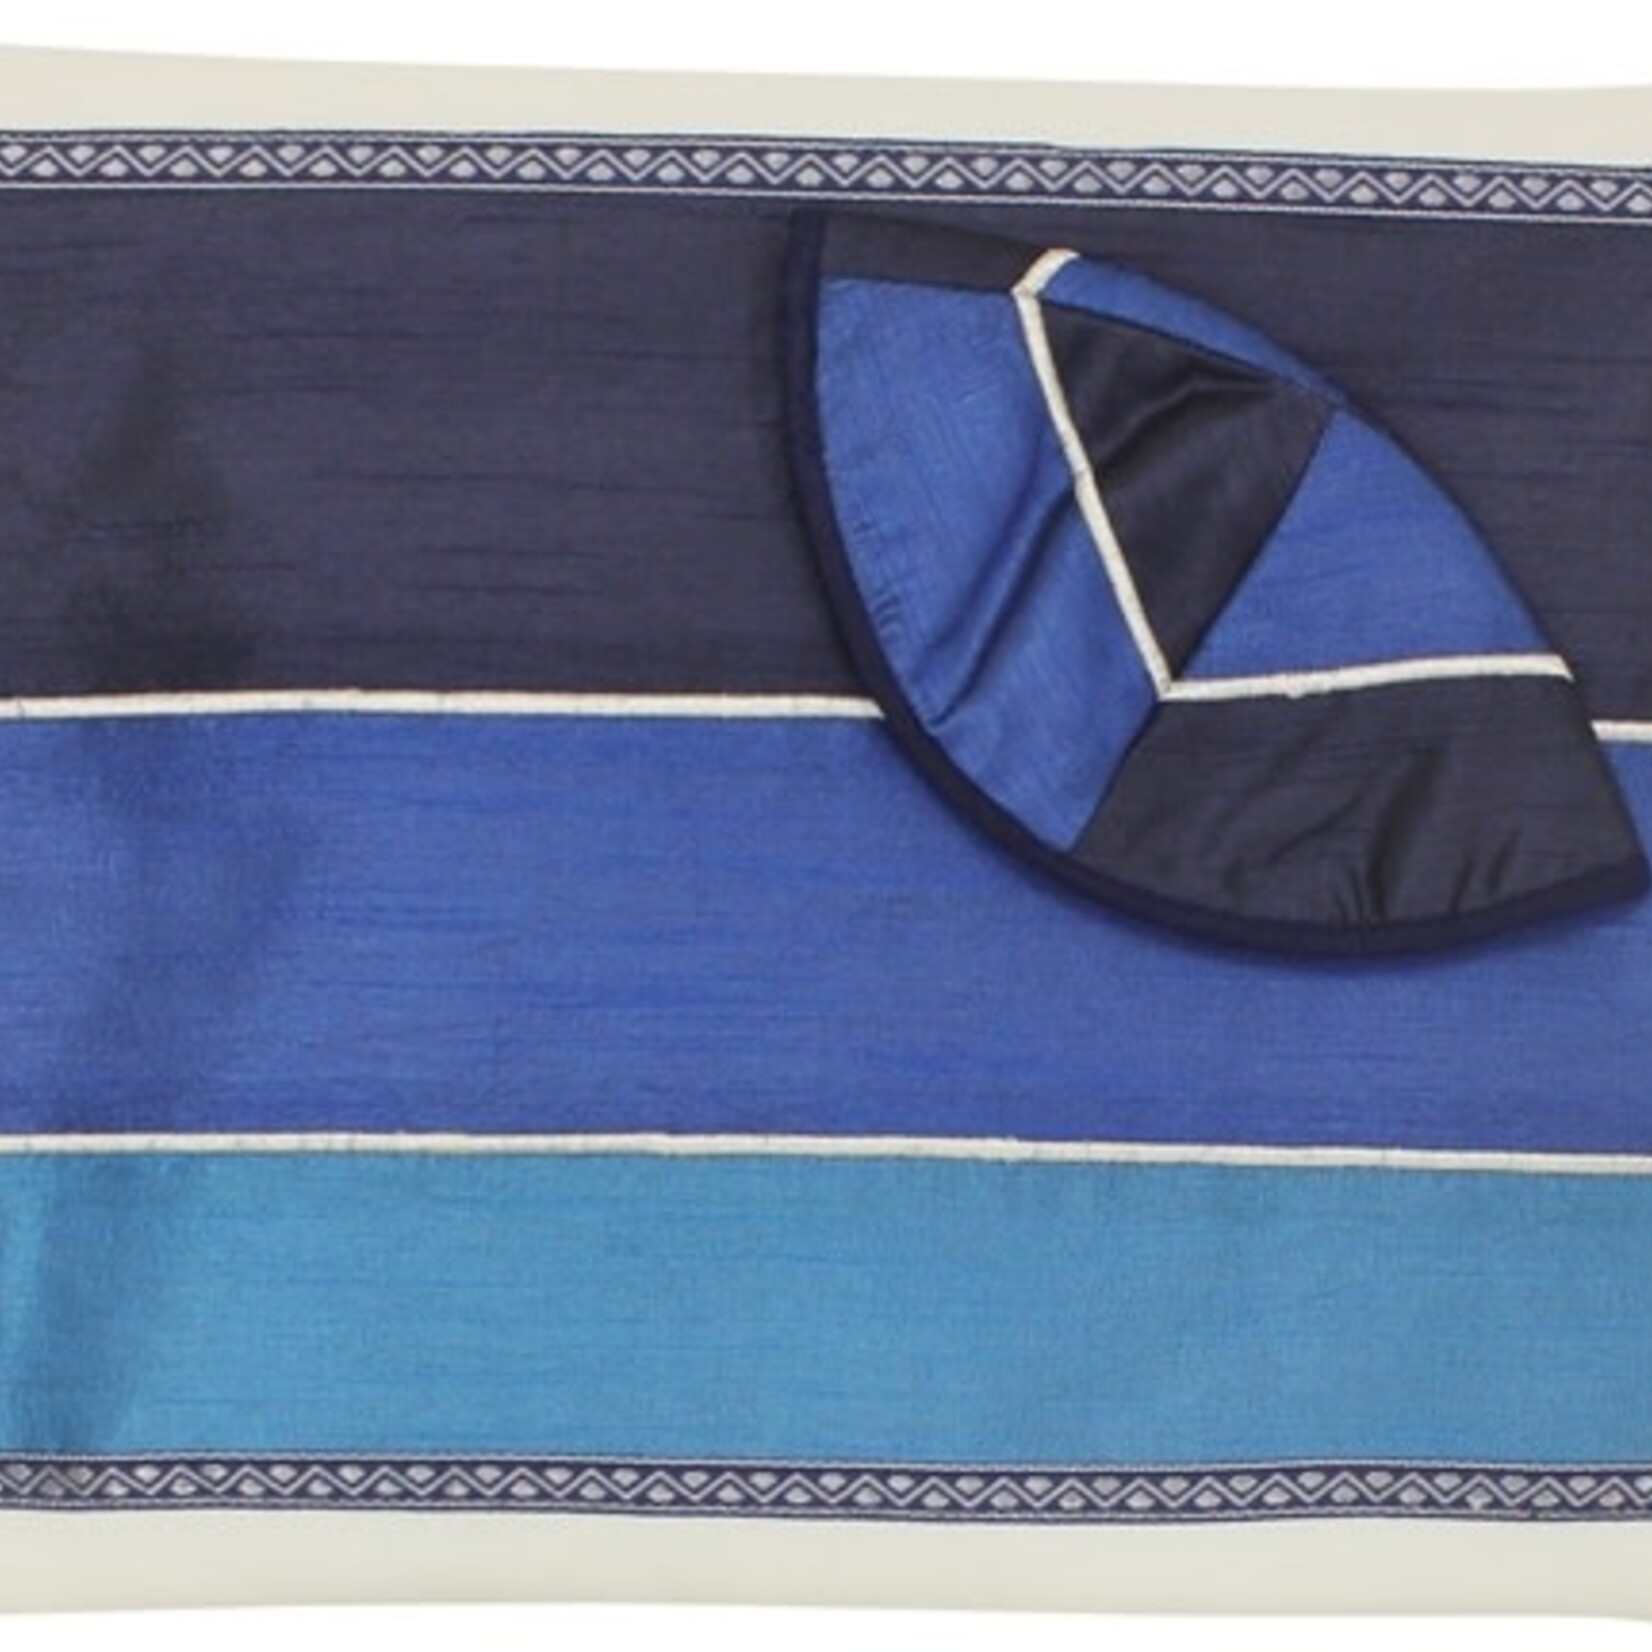 Talit Viscose Blue Striped Embroidery With Bag & Kippah